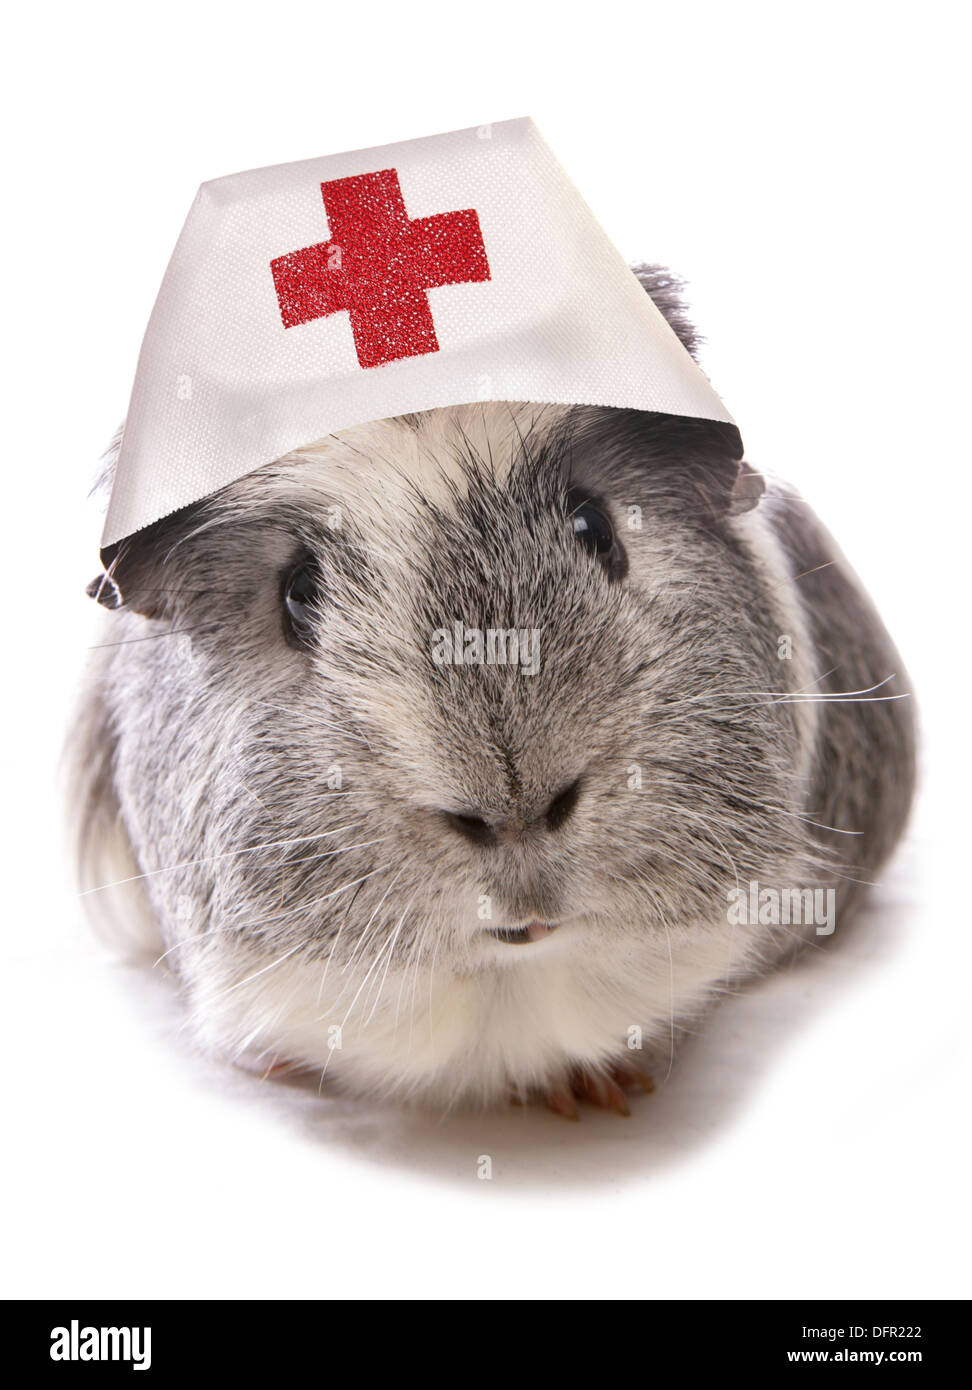 Guinea pig wearing nurses hat Stock Photo